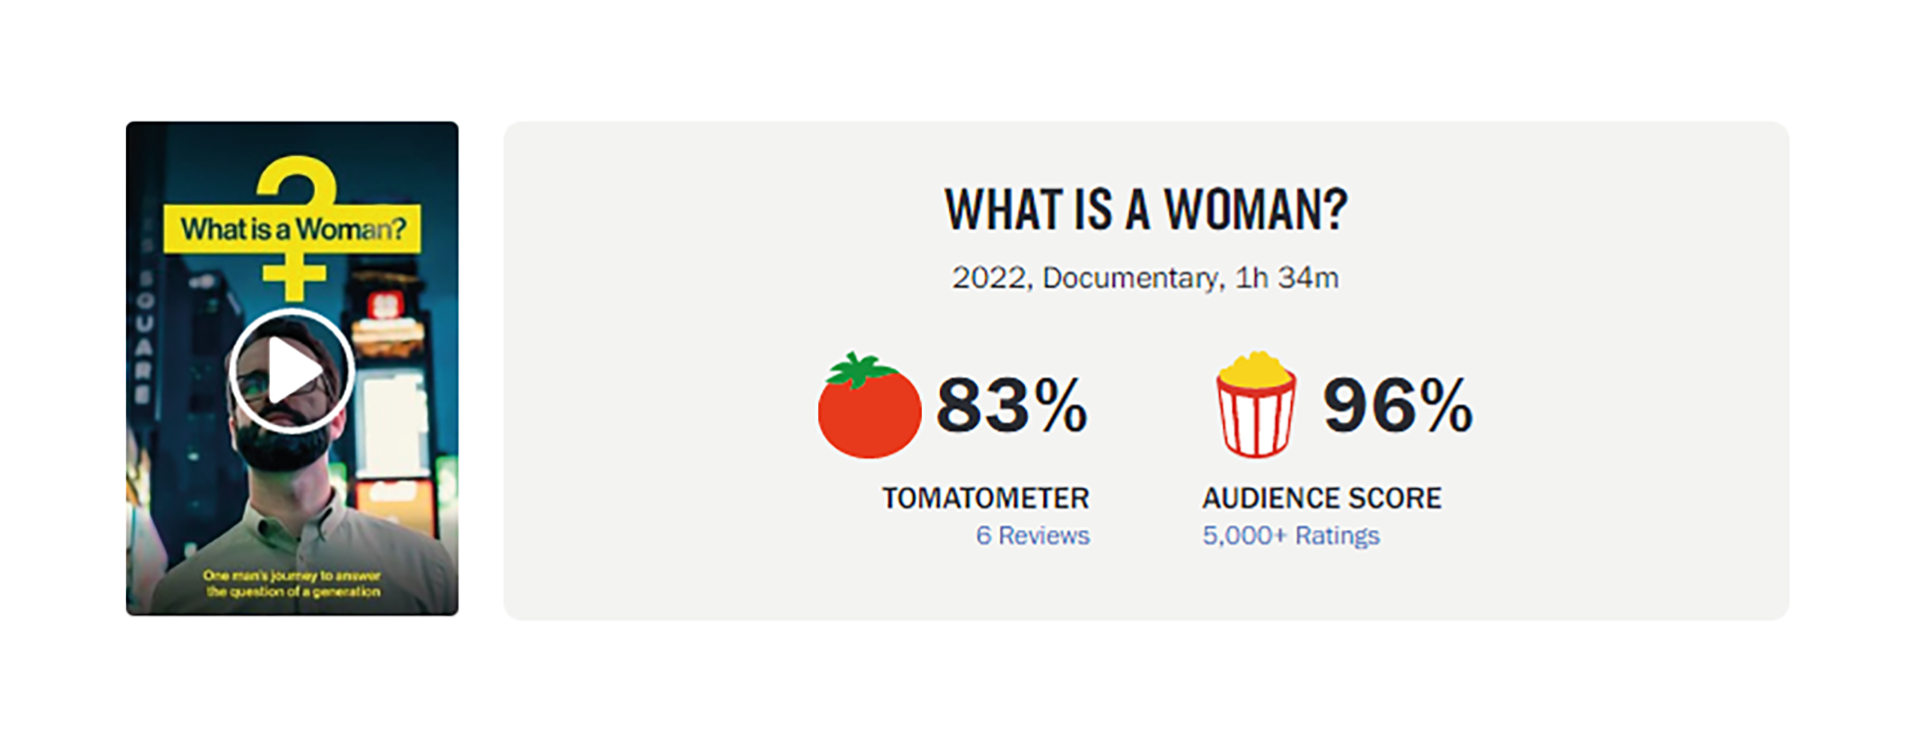 La calificación del documental "What is a woman?" en Rotten Tomatoes